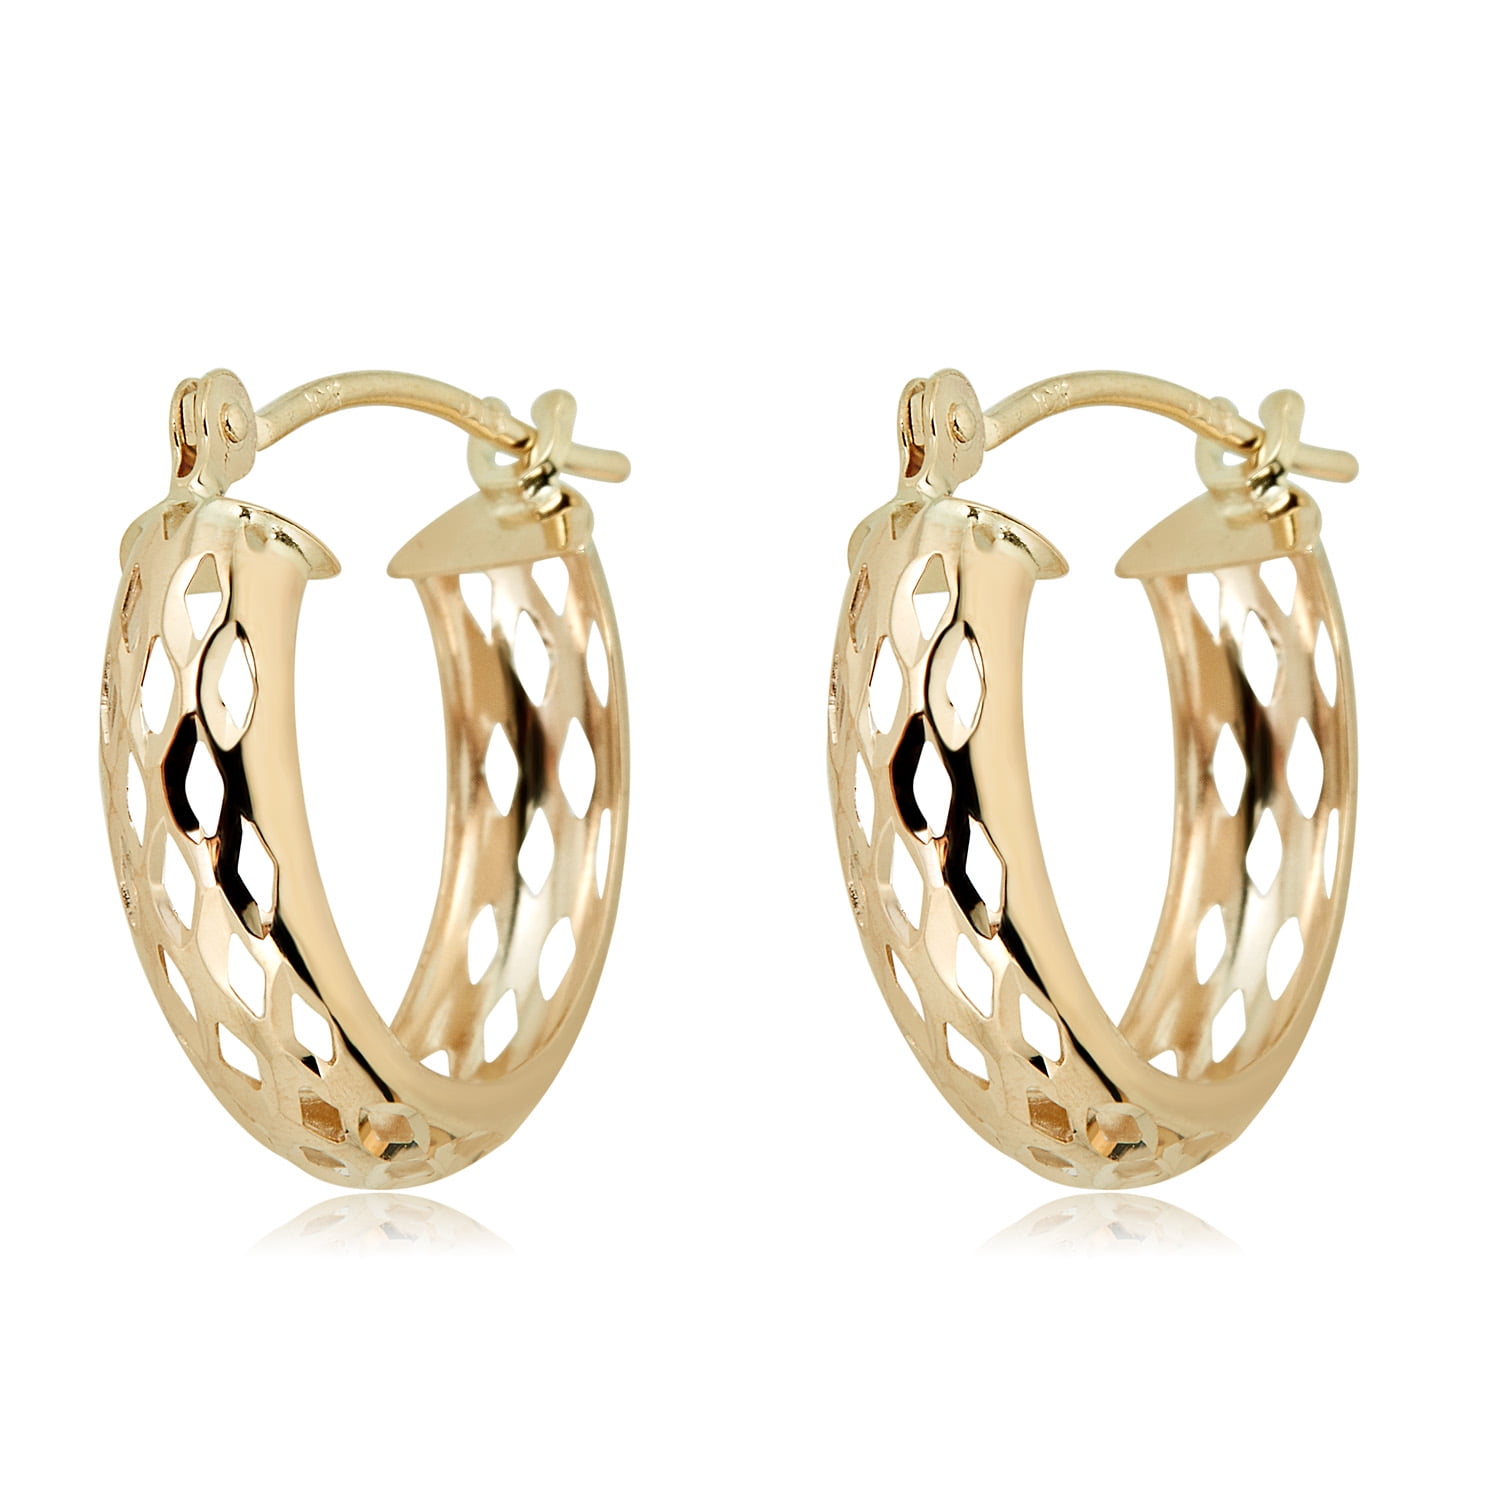 10k Yellow Gold Diamond-cut 3mm Round Hoop Earrings Length 15mm